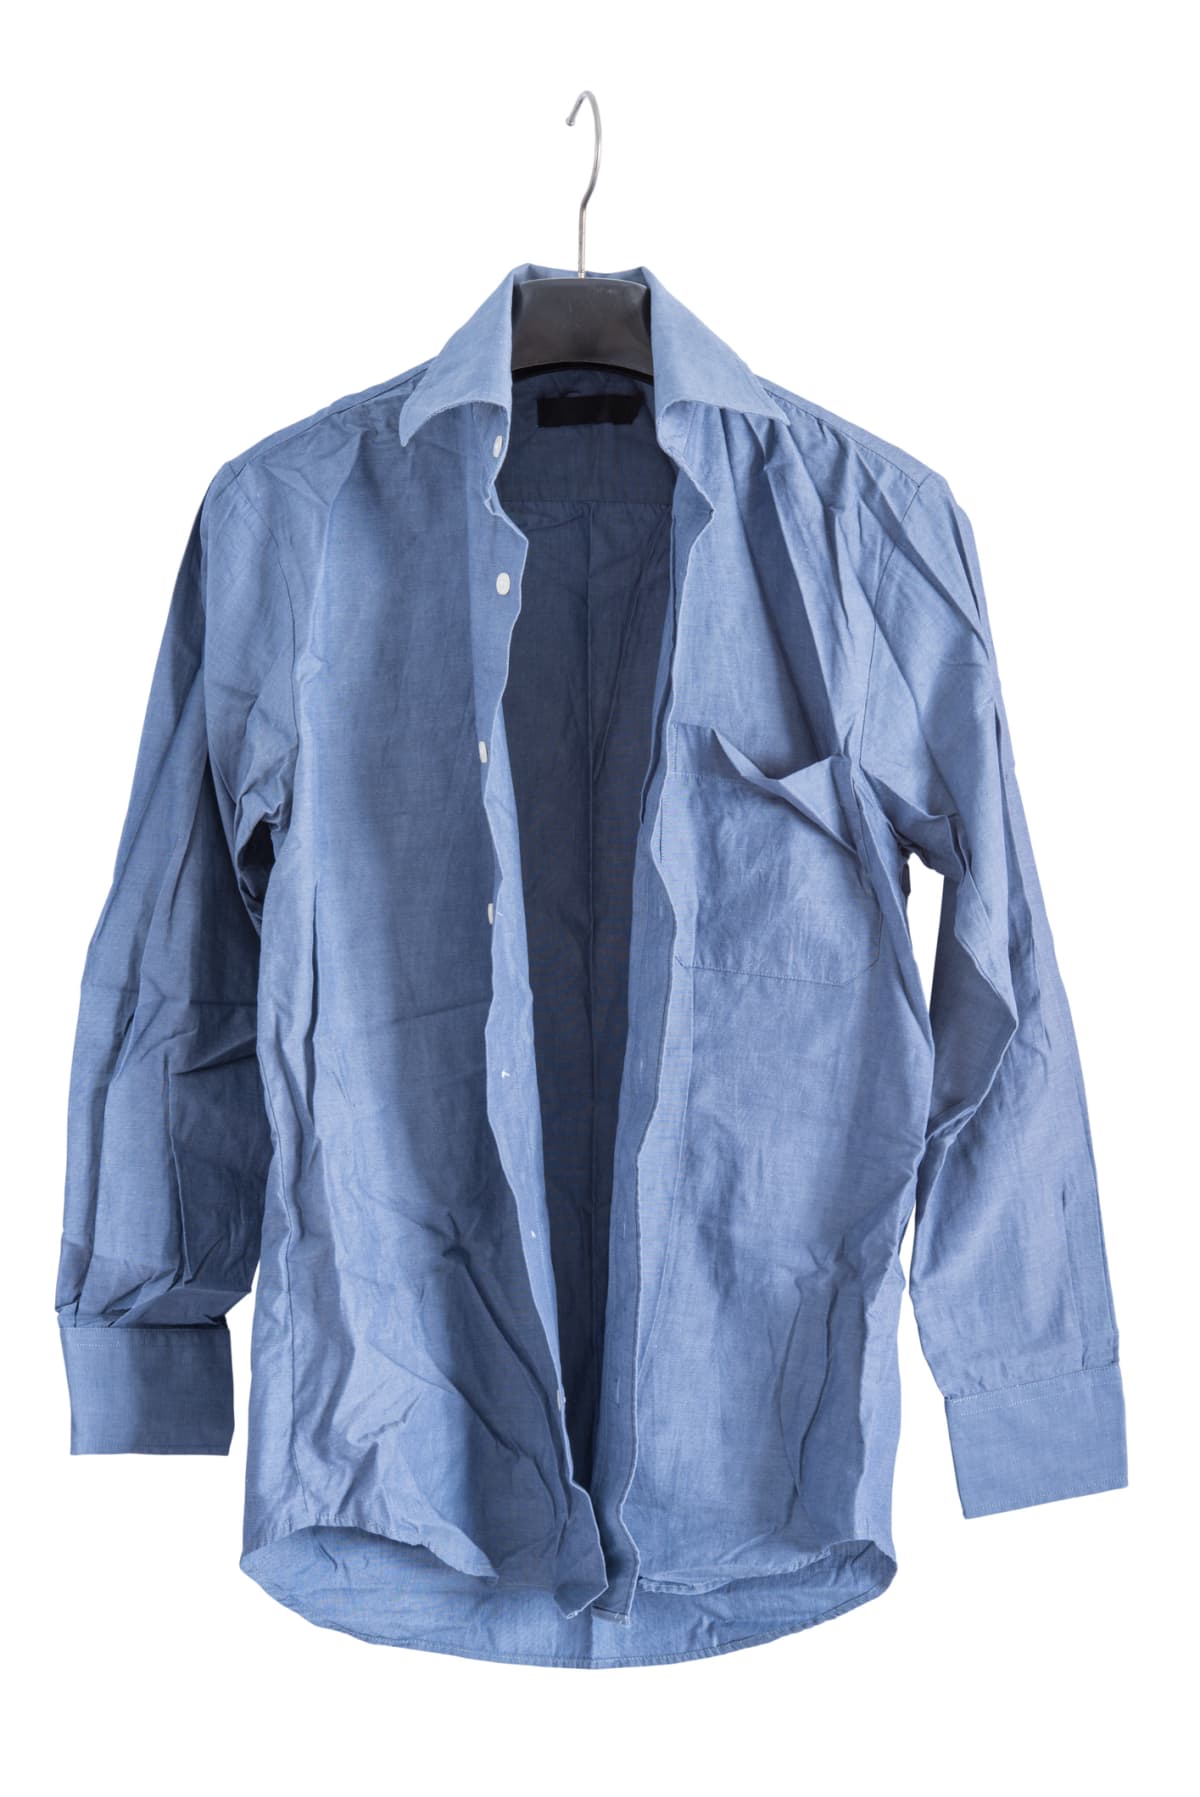 Wrinkled blue shirt on a hanger